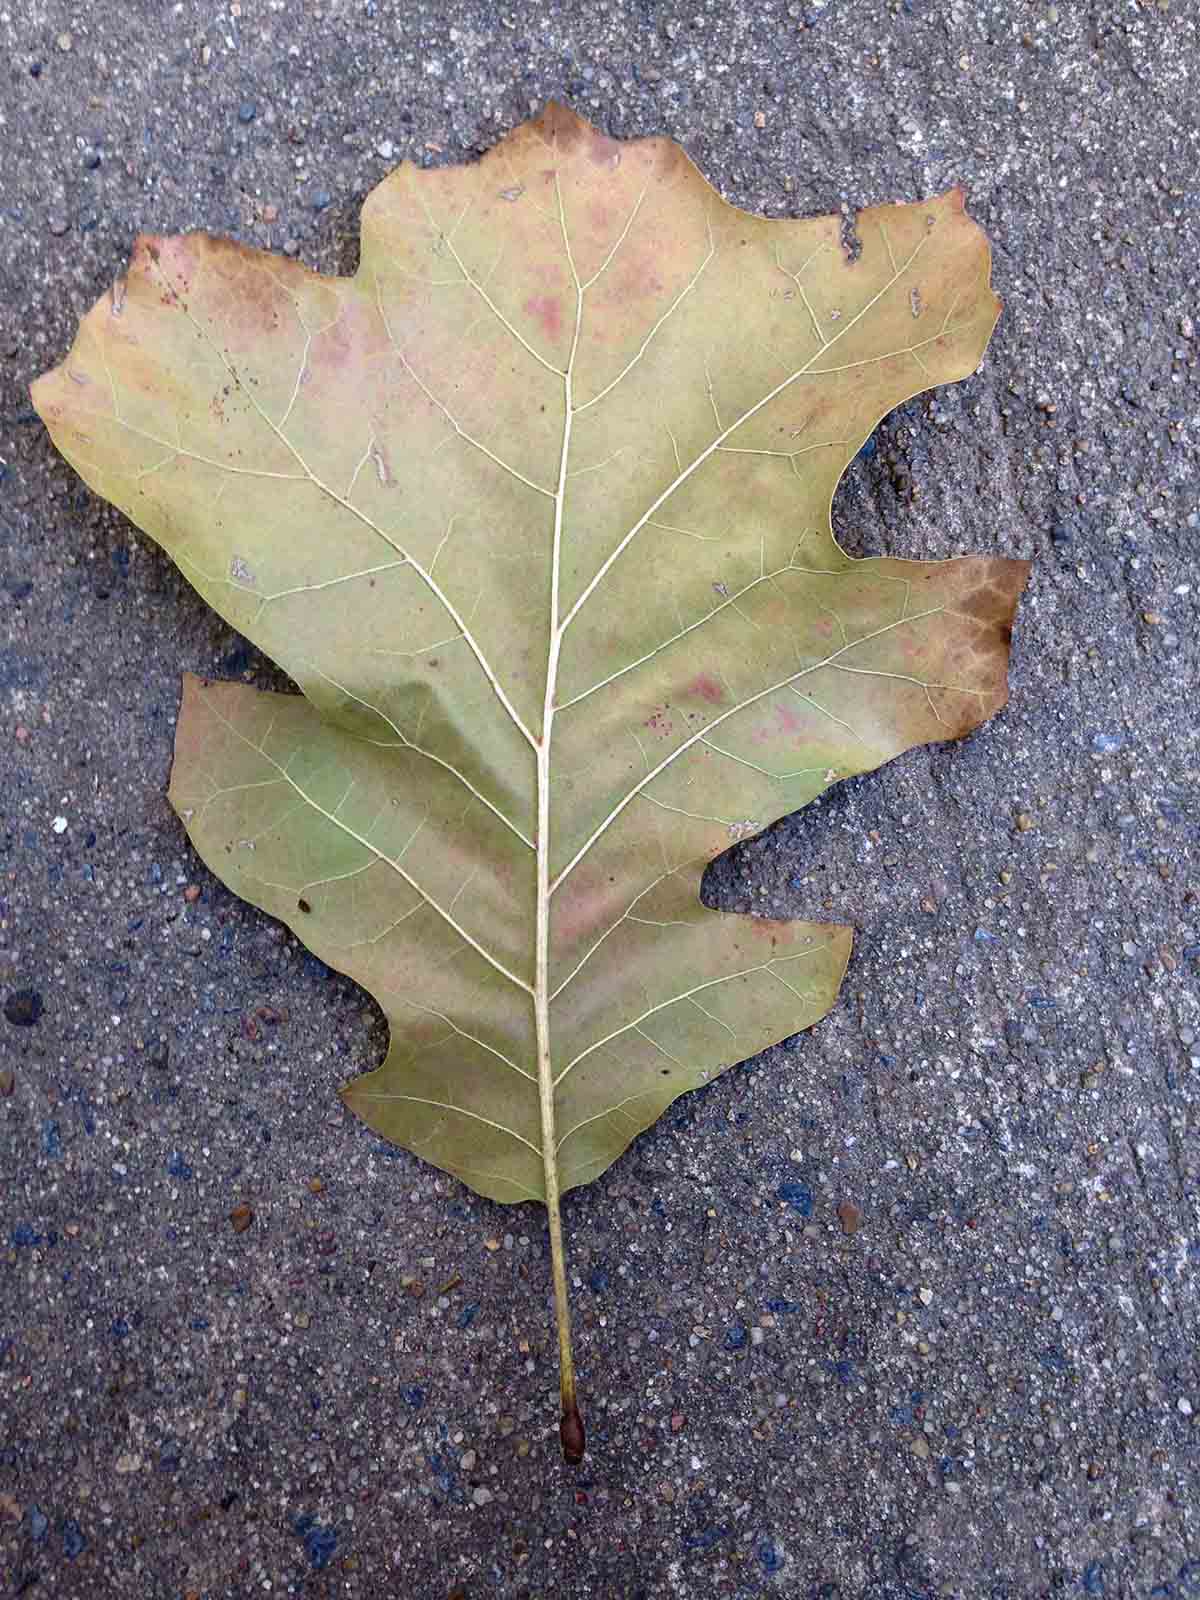 Black oak leaf, underside